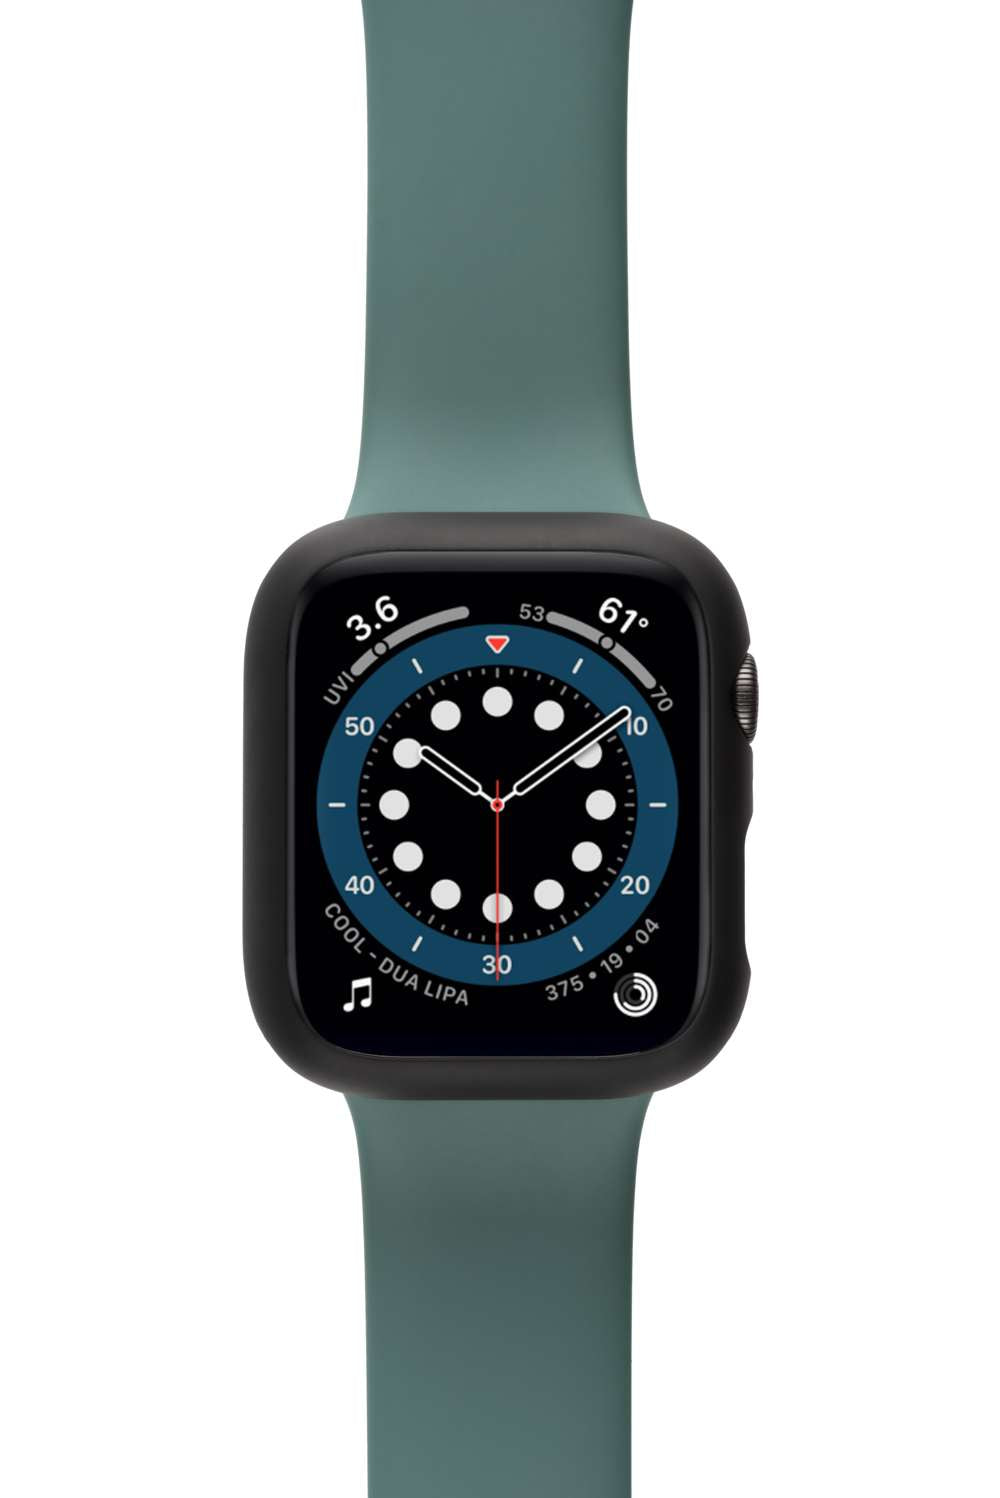 Full body case + Screen protector - Apple Watch Serie 4/5/6/SE - Black